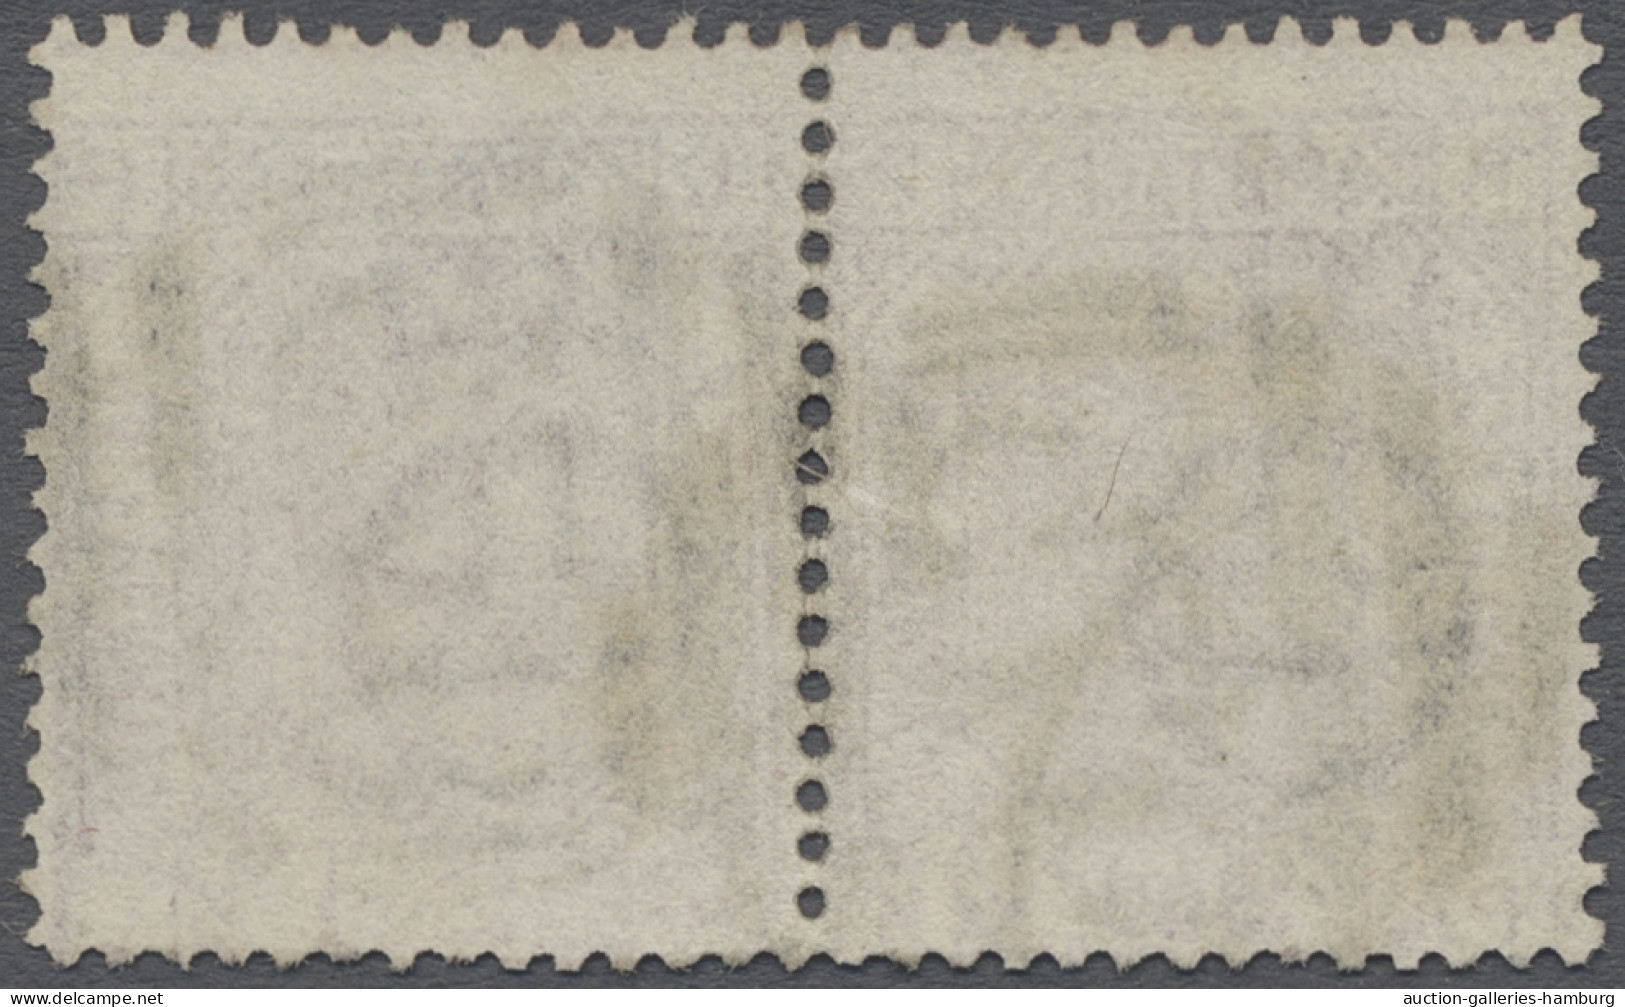 Pair/o Cyprus: 1878/1880, Großbritannien "Victoria" 2 1/2 Pence Lilarosa Aus Der Platte - Autres